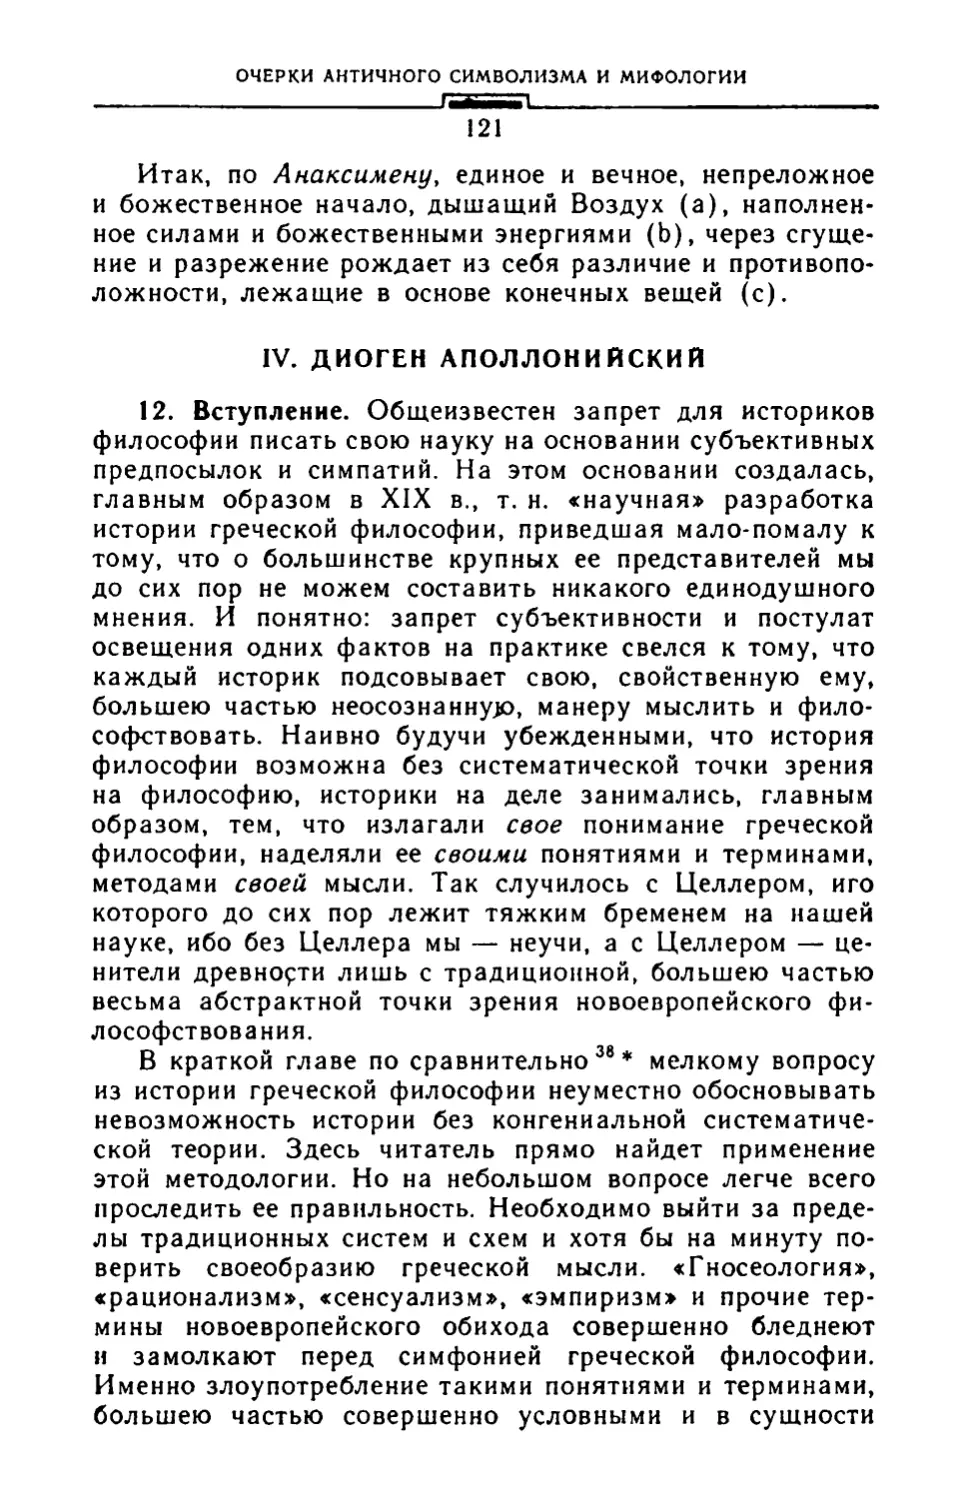 IV. Диоген Аполлонинский